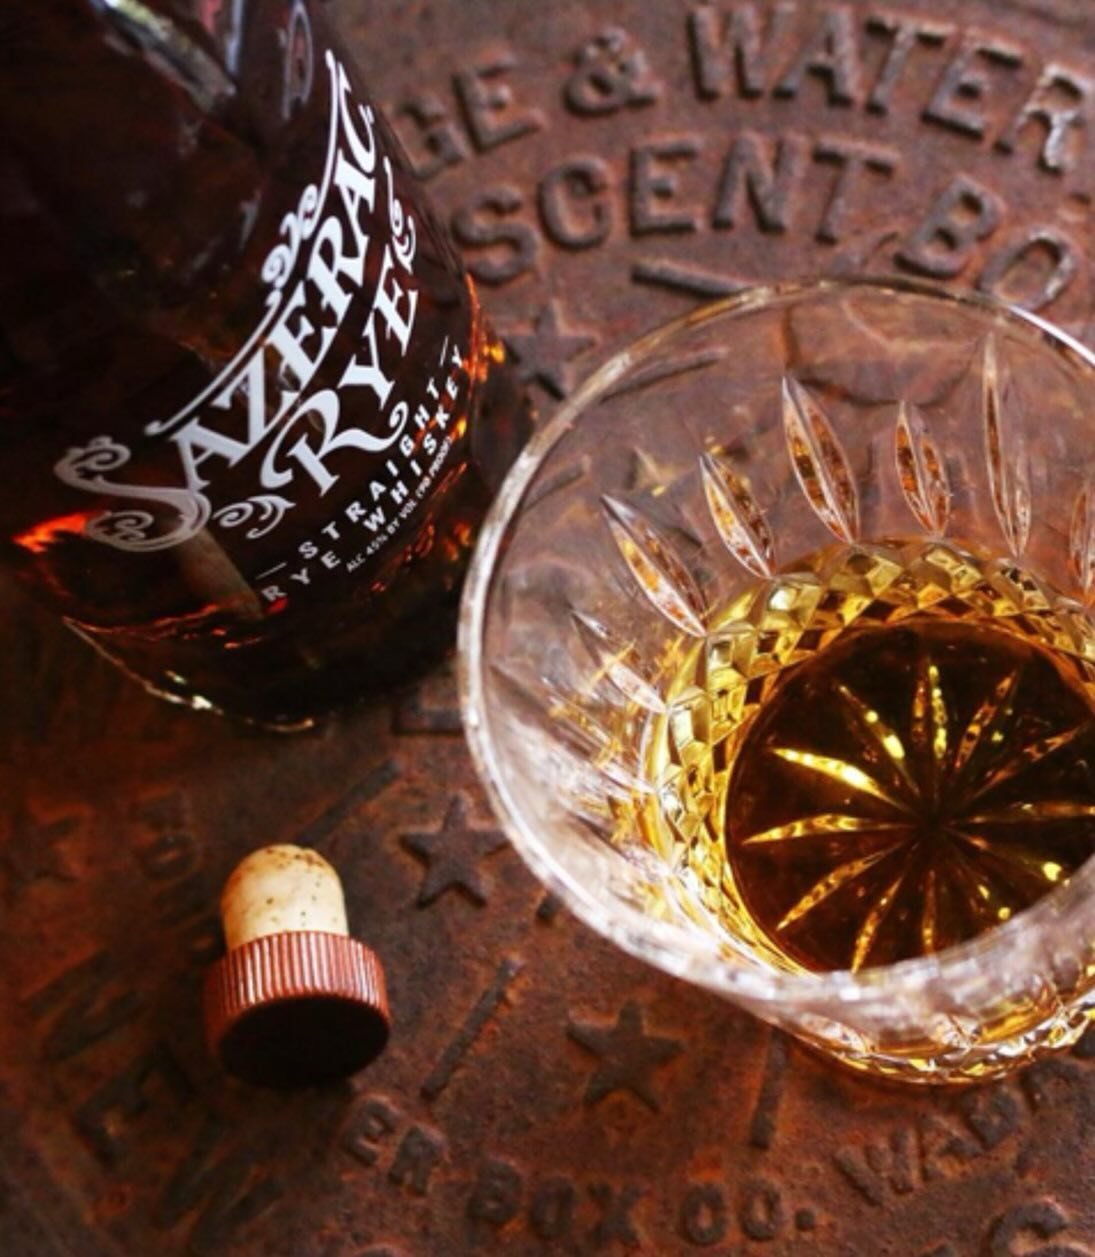 Historien om Sazerac Rye b&ouml;rjar p&aring; 1850-talet d&aring; USA:s f&ouml;rsta namngivna cocktail skapas i New Orleans. En Sazerac Cocktail blandades initialt av absint, cognac fr&aring;n franska Sazerac-de-Forge et Fils, Peychaud&rsquo;s bitter